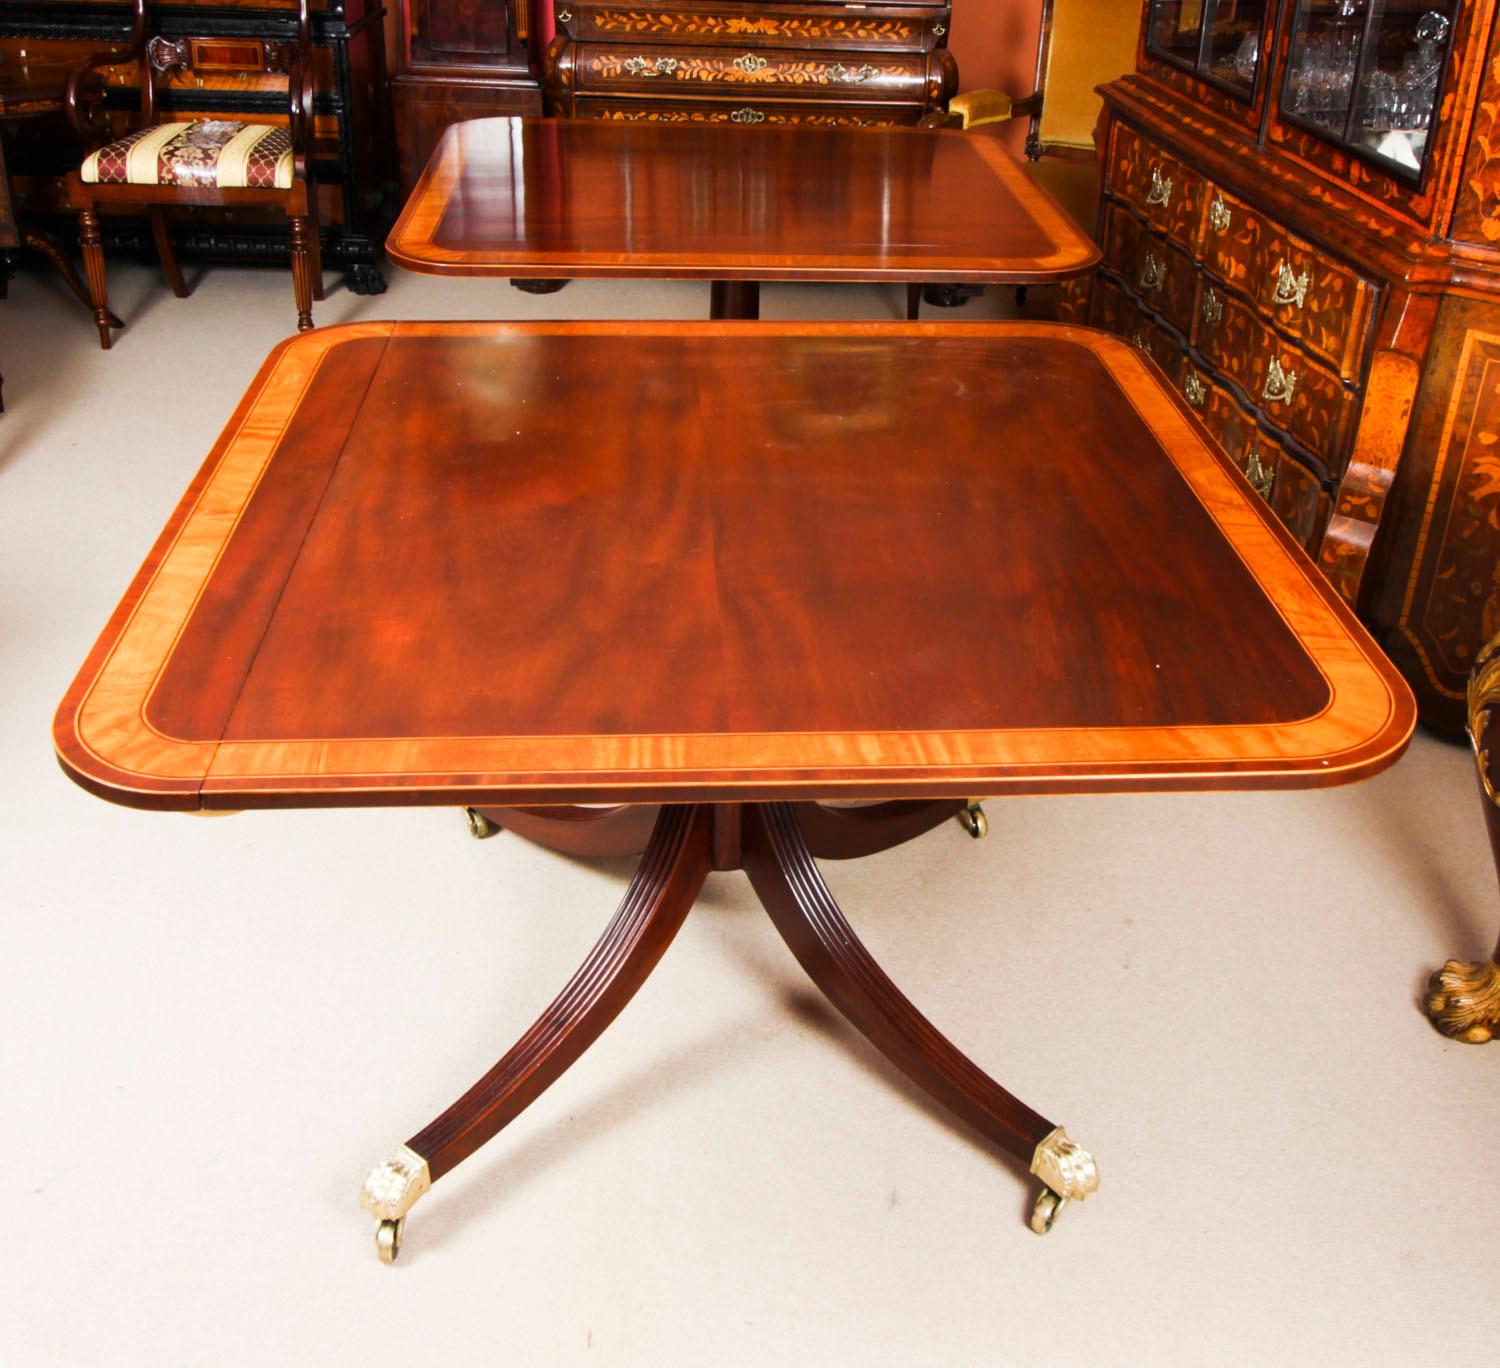 Antique Regency Revival Metamorphic Dining Table, 19th Century 5